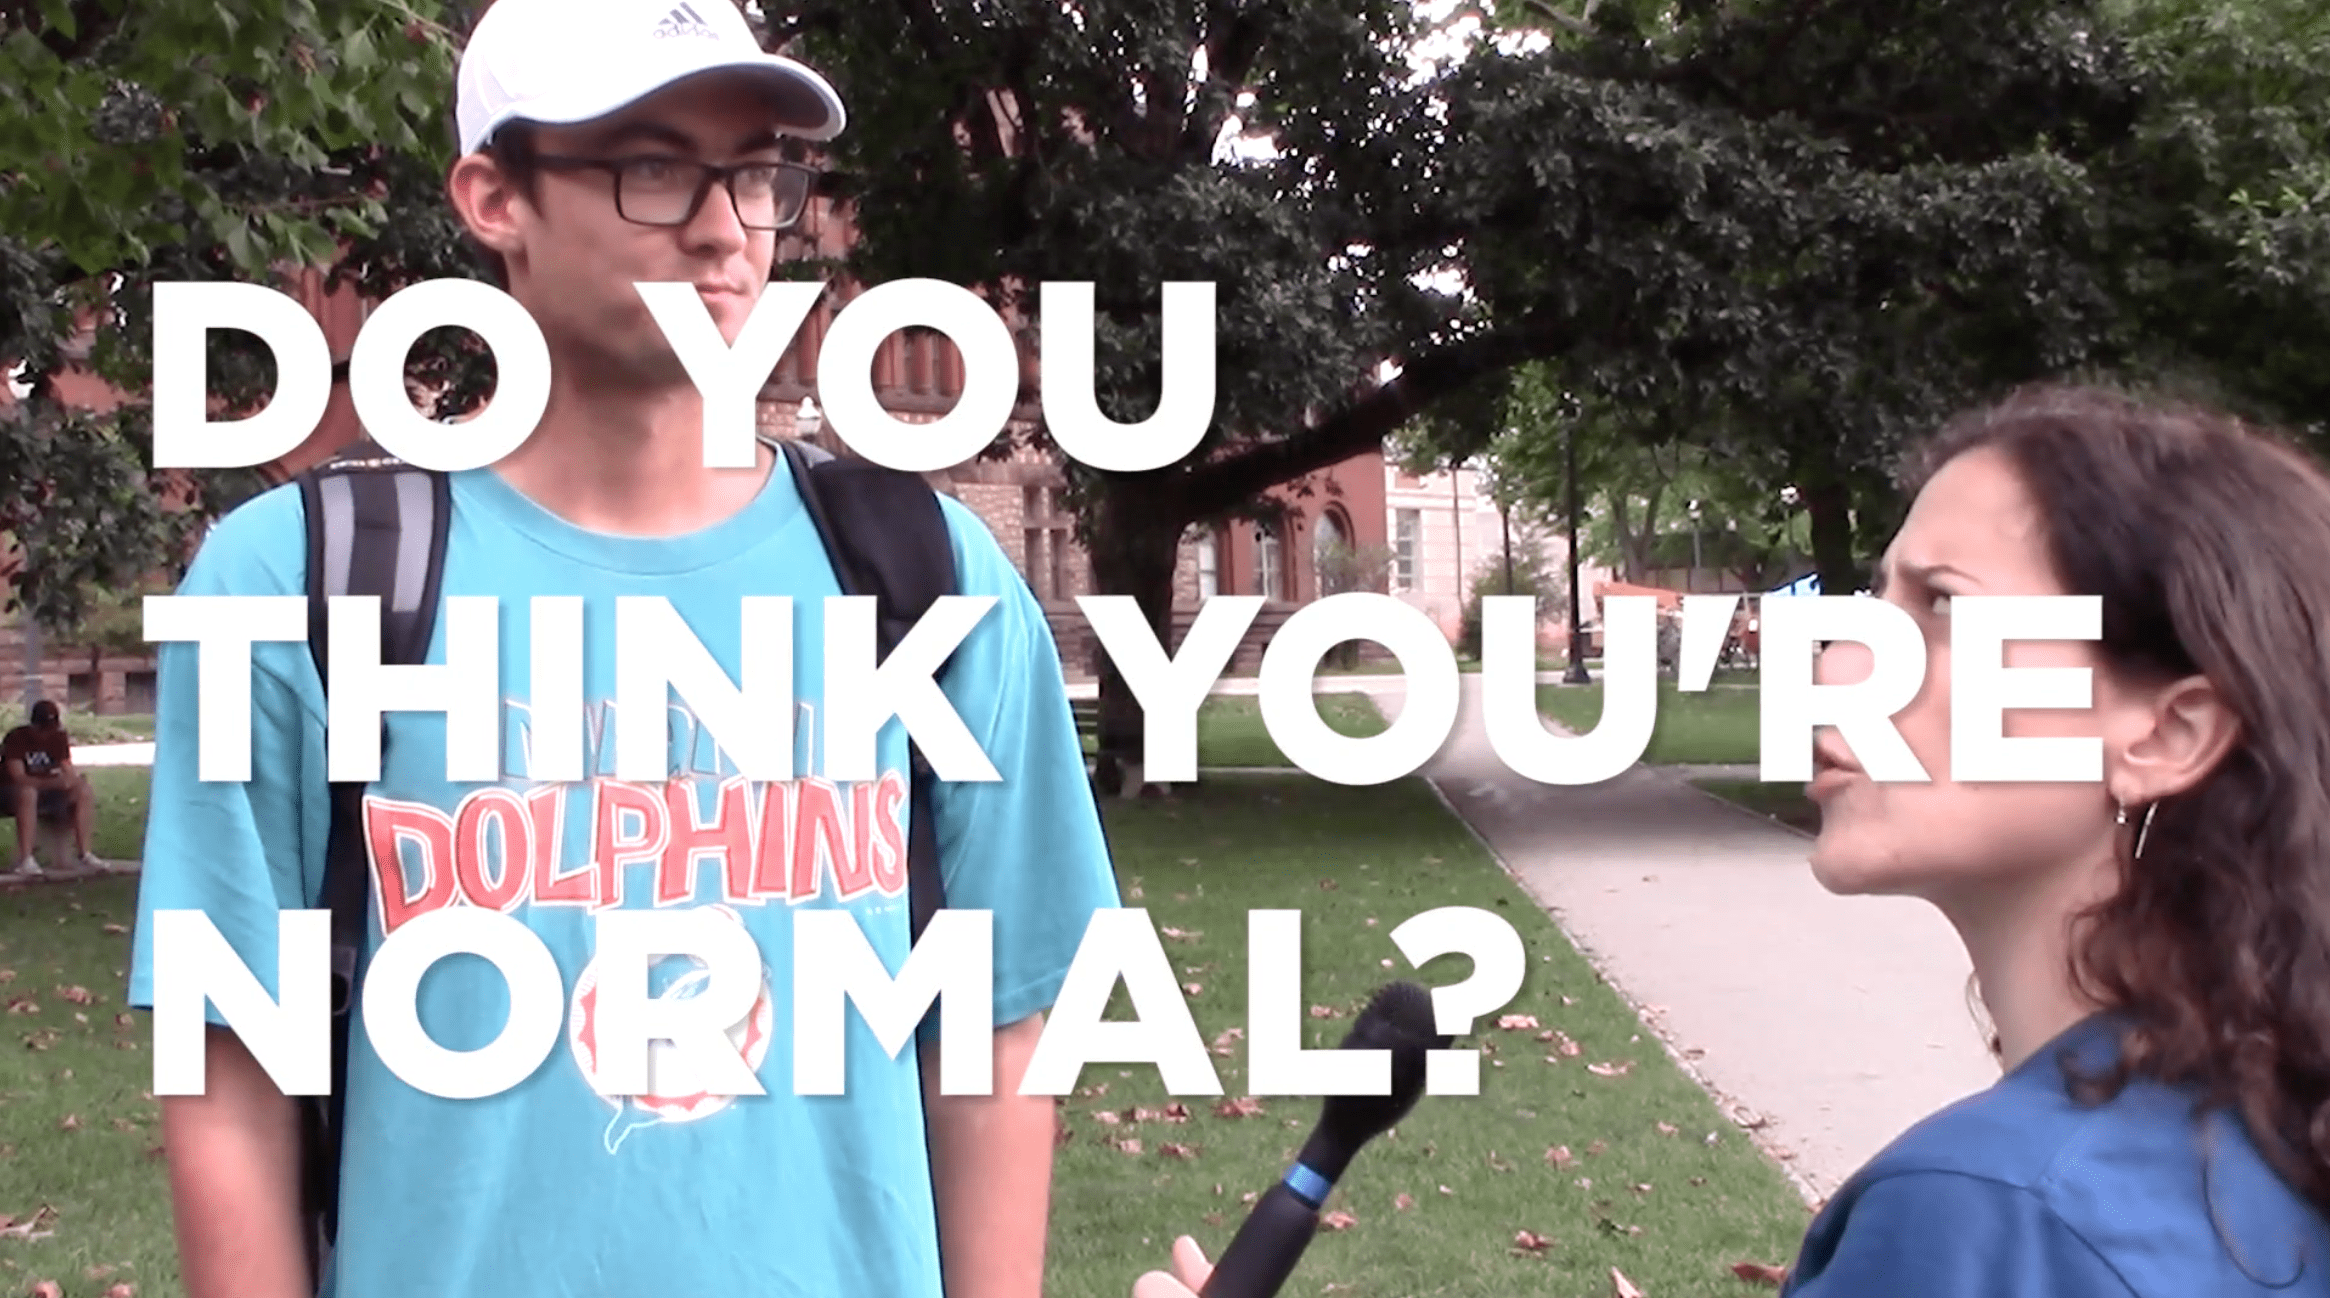 How do you define normal?